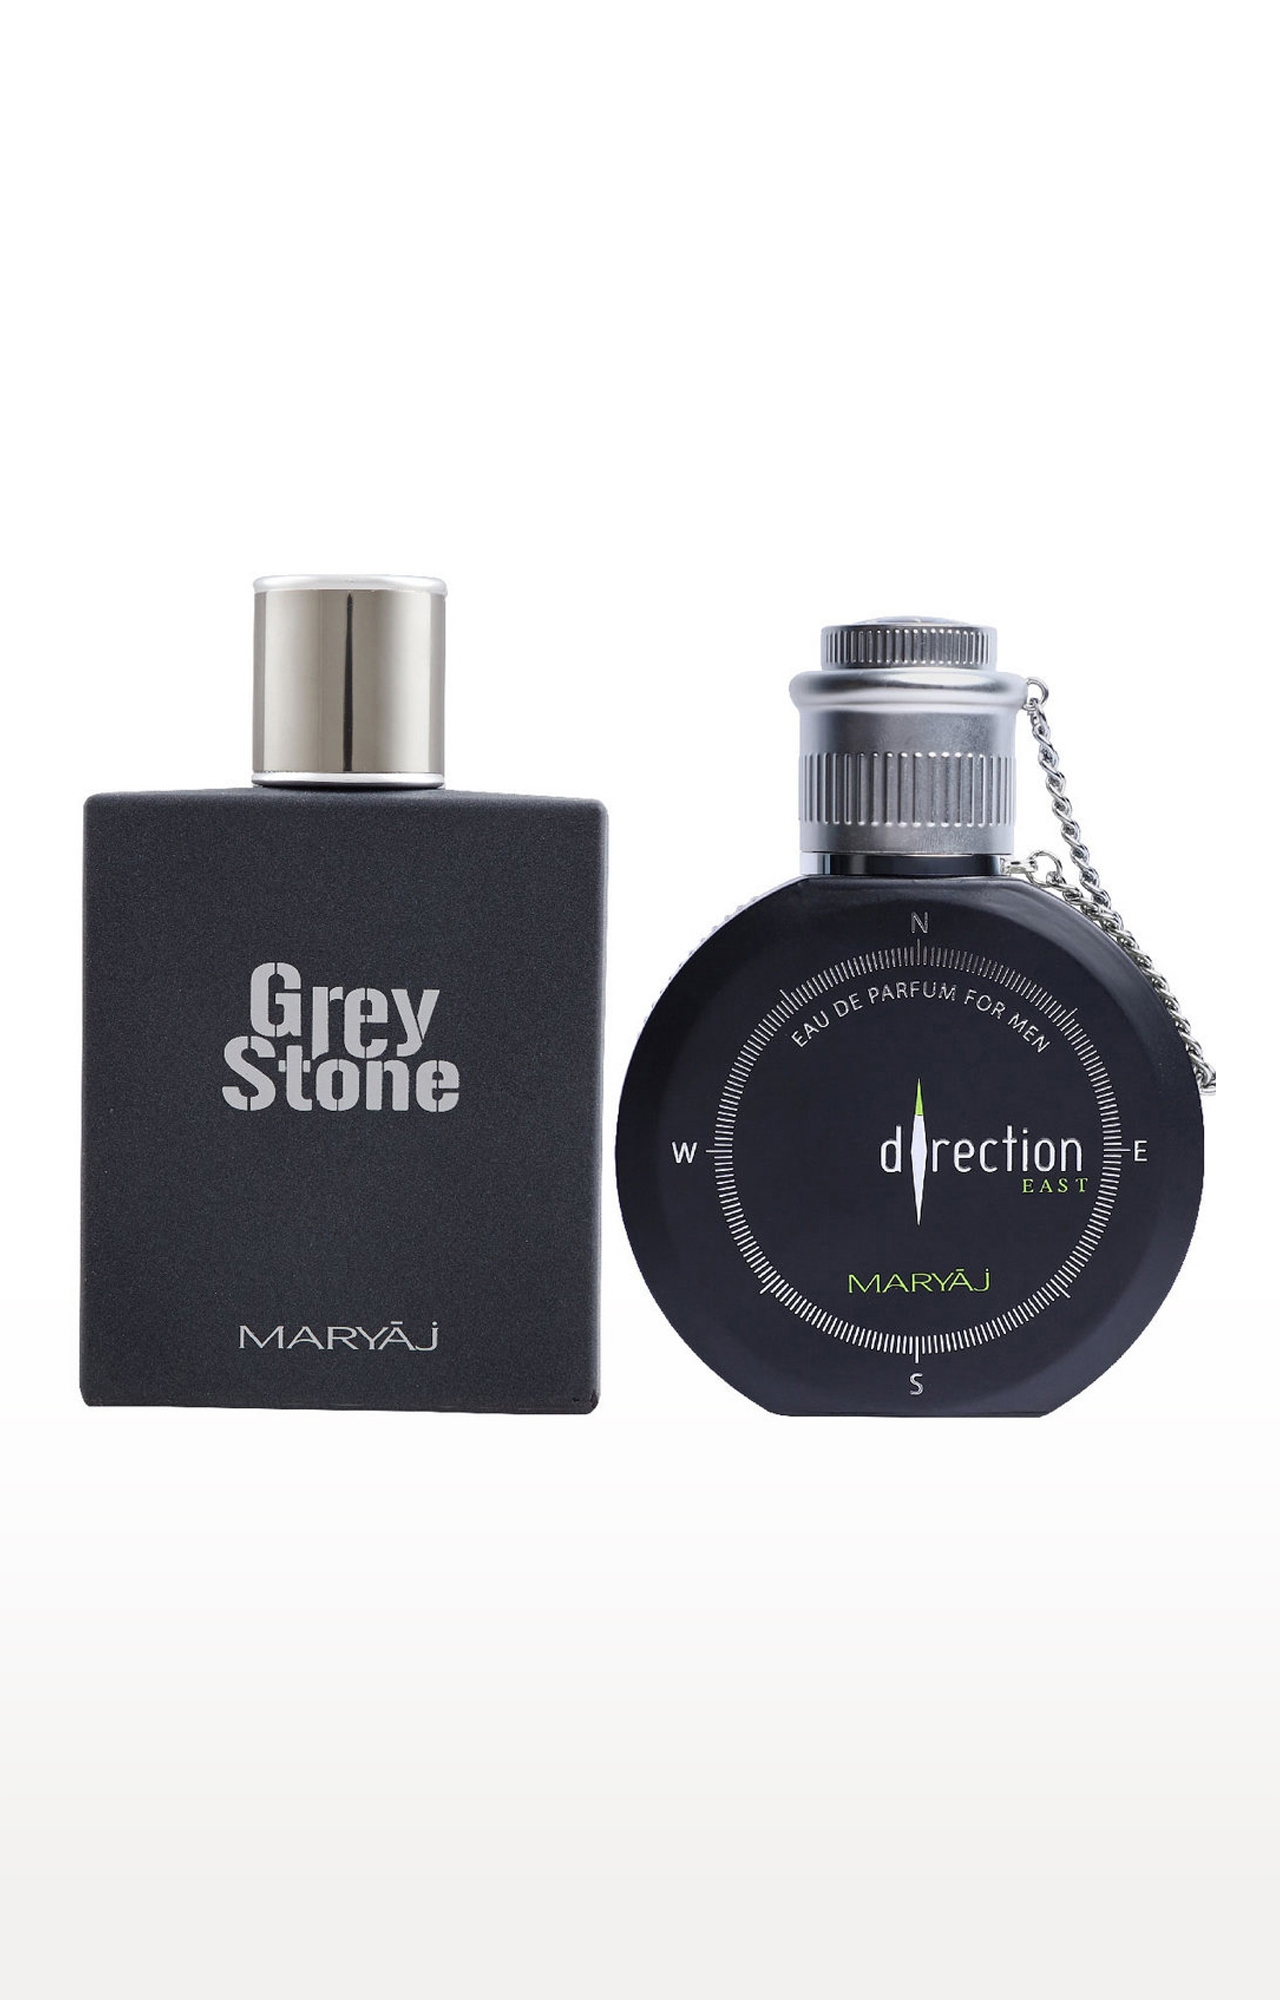 Maryaj | Maryaj Grey Stone Eau De Parfum Perfume 100ml for Men and Maryaj Direction East Eau De Parfum Perfume 100ml for Men